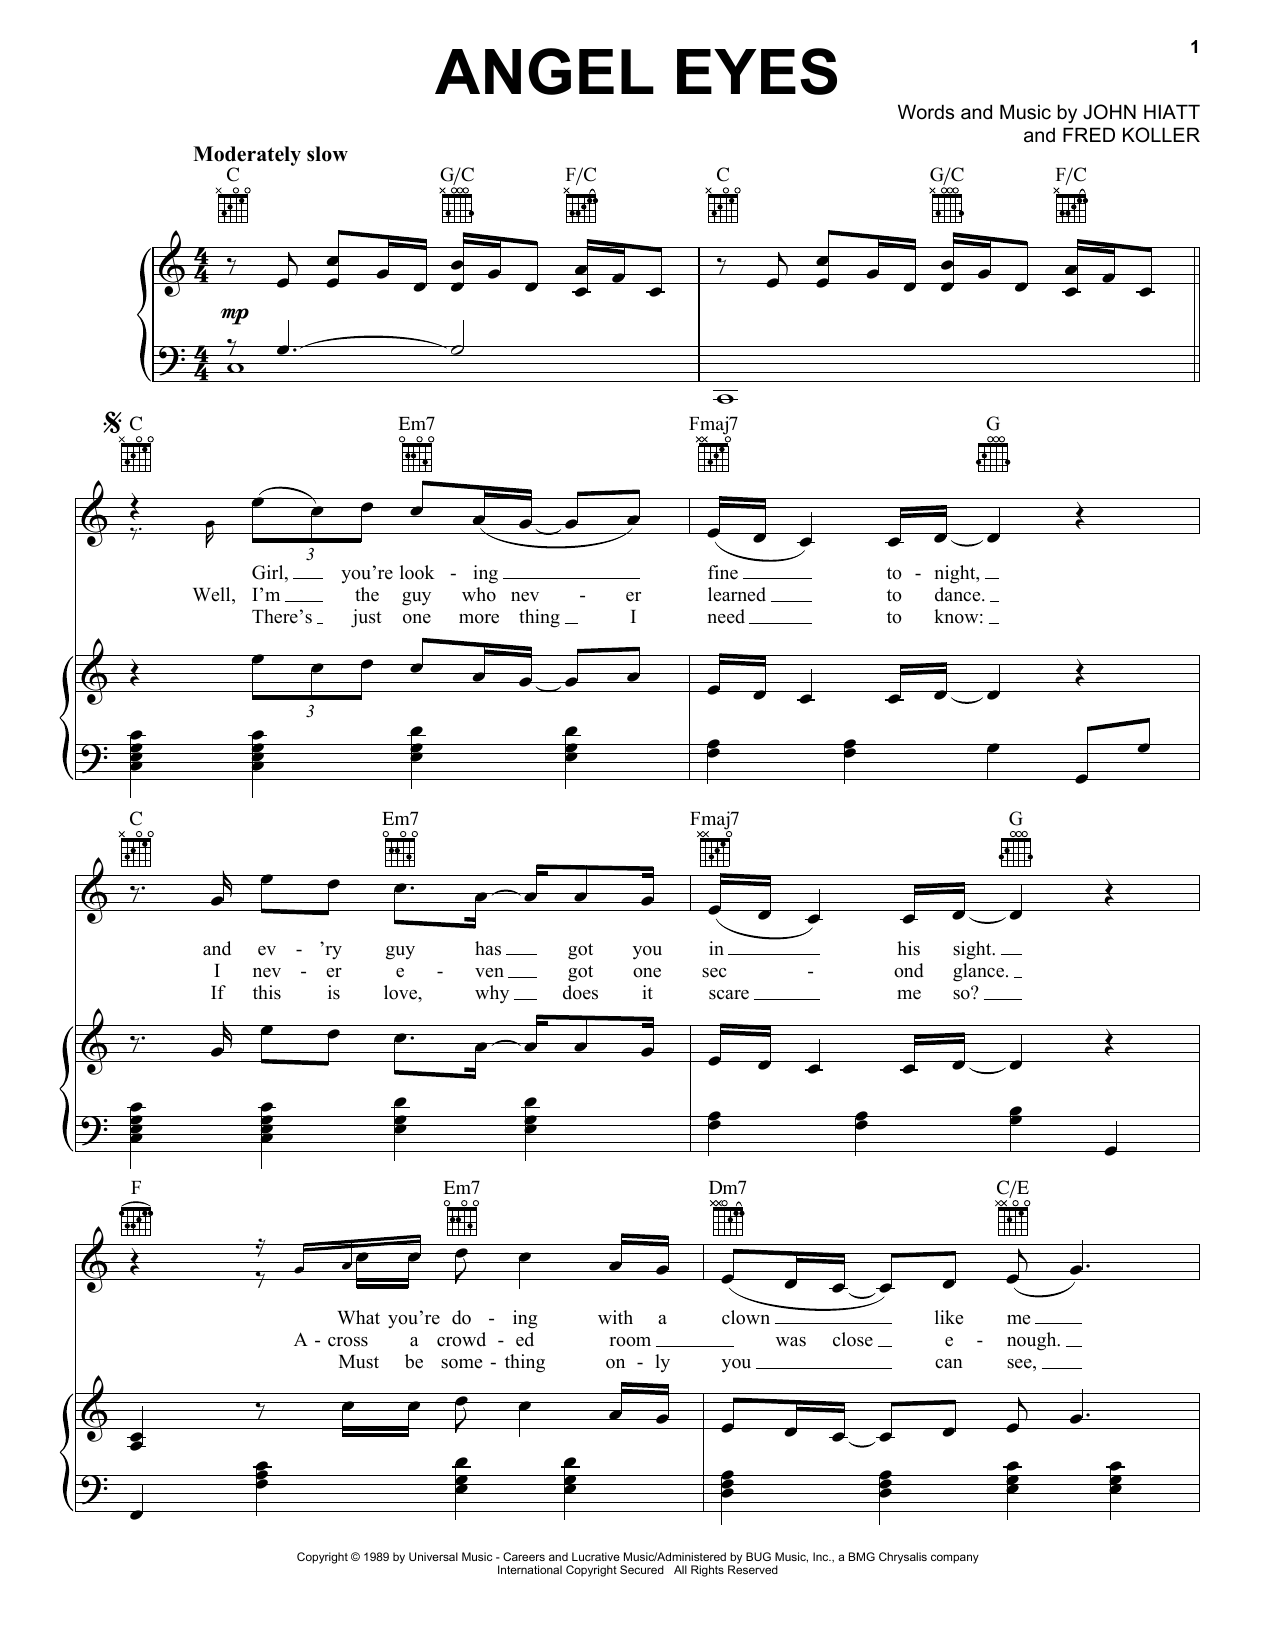 John Hiatt Angel Eyes Sheet Music Notes & Chords for Easy Piano - Download or Print PDF